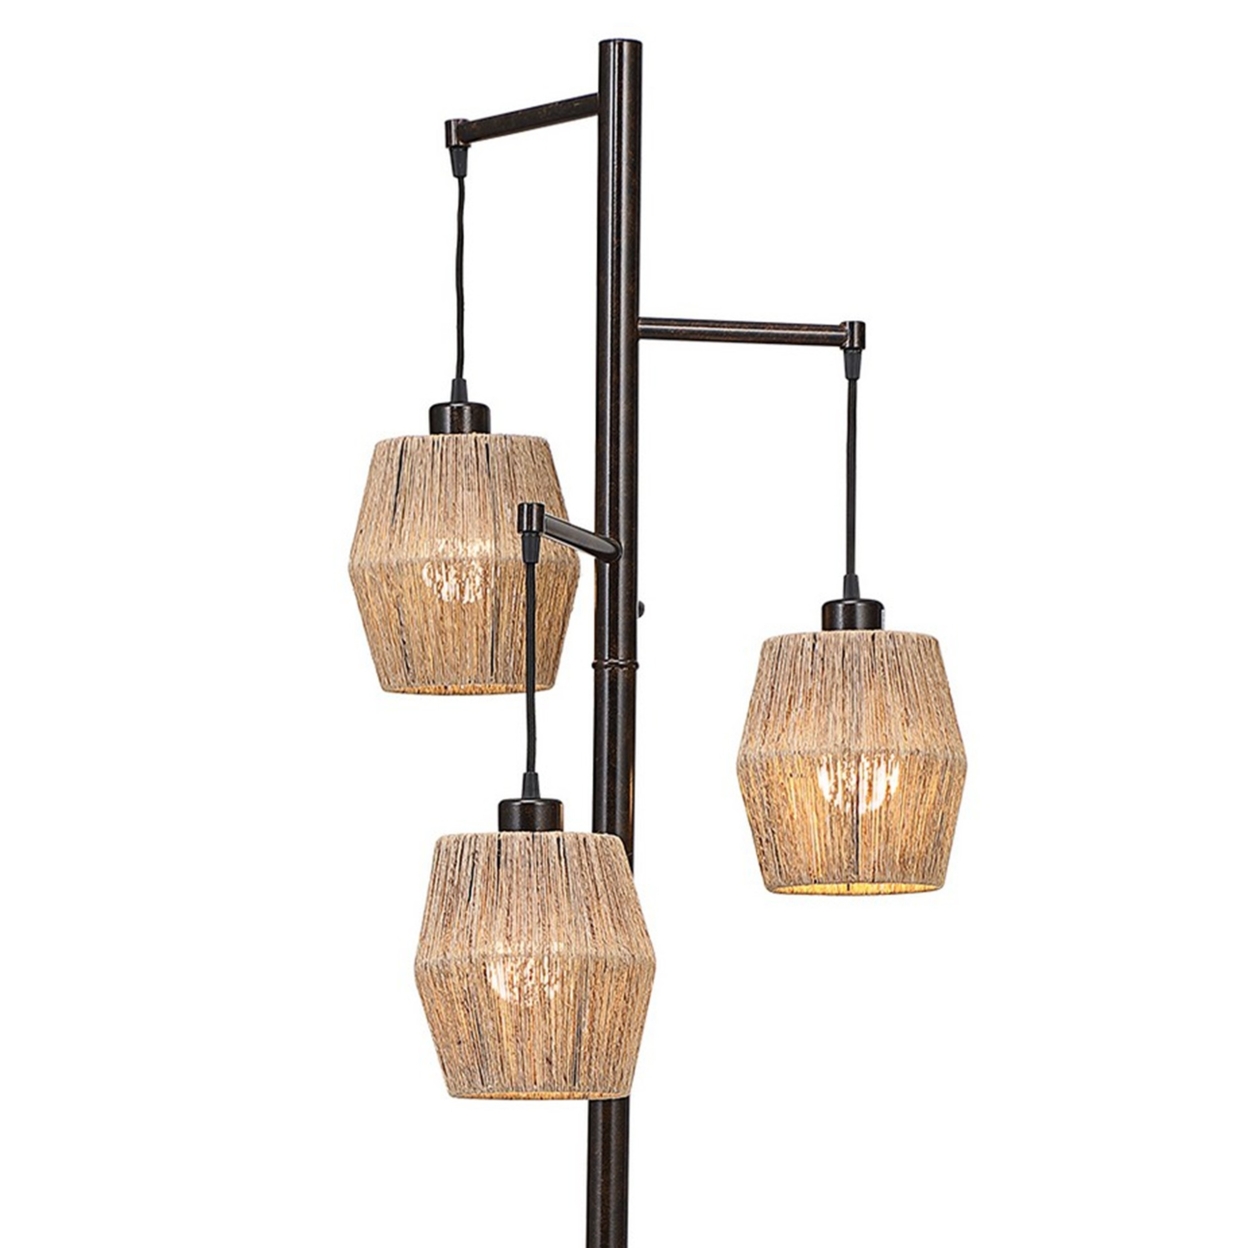 Stalk Design Metal Floor Lamp With 3 Hanging Rope Shade, Bronze- Saltoro Sherpi